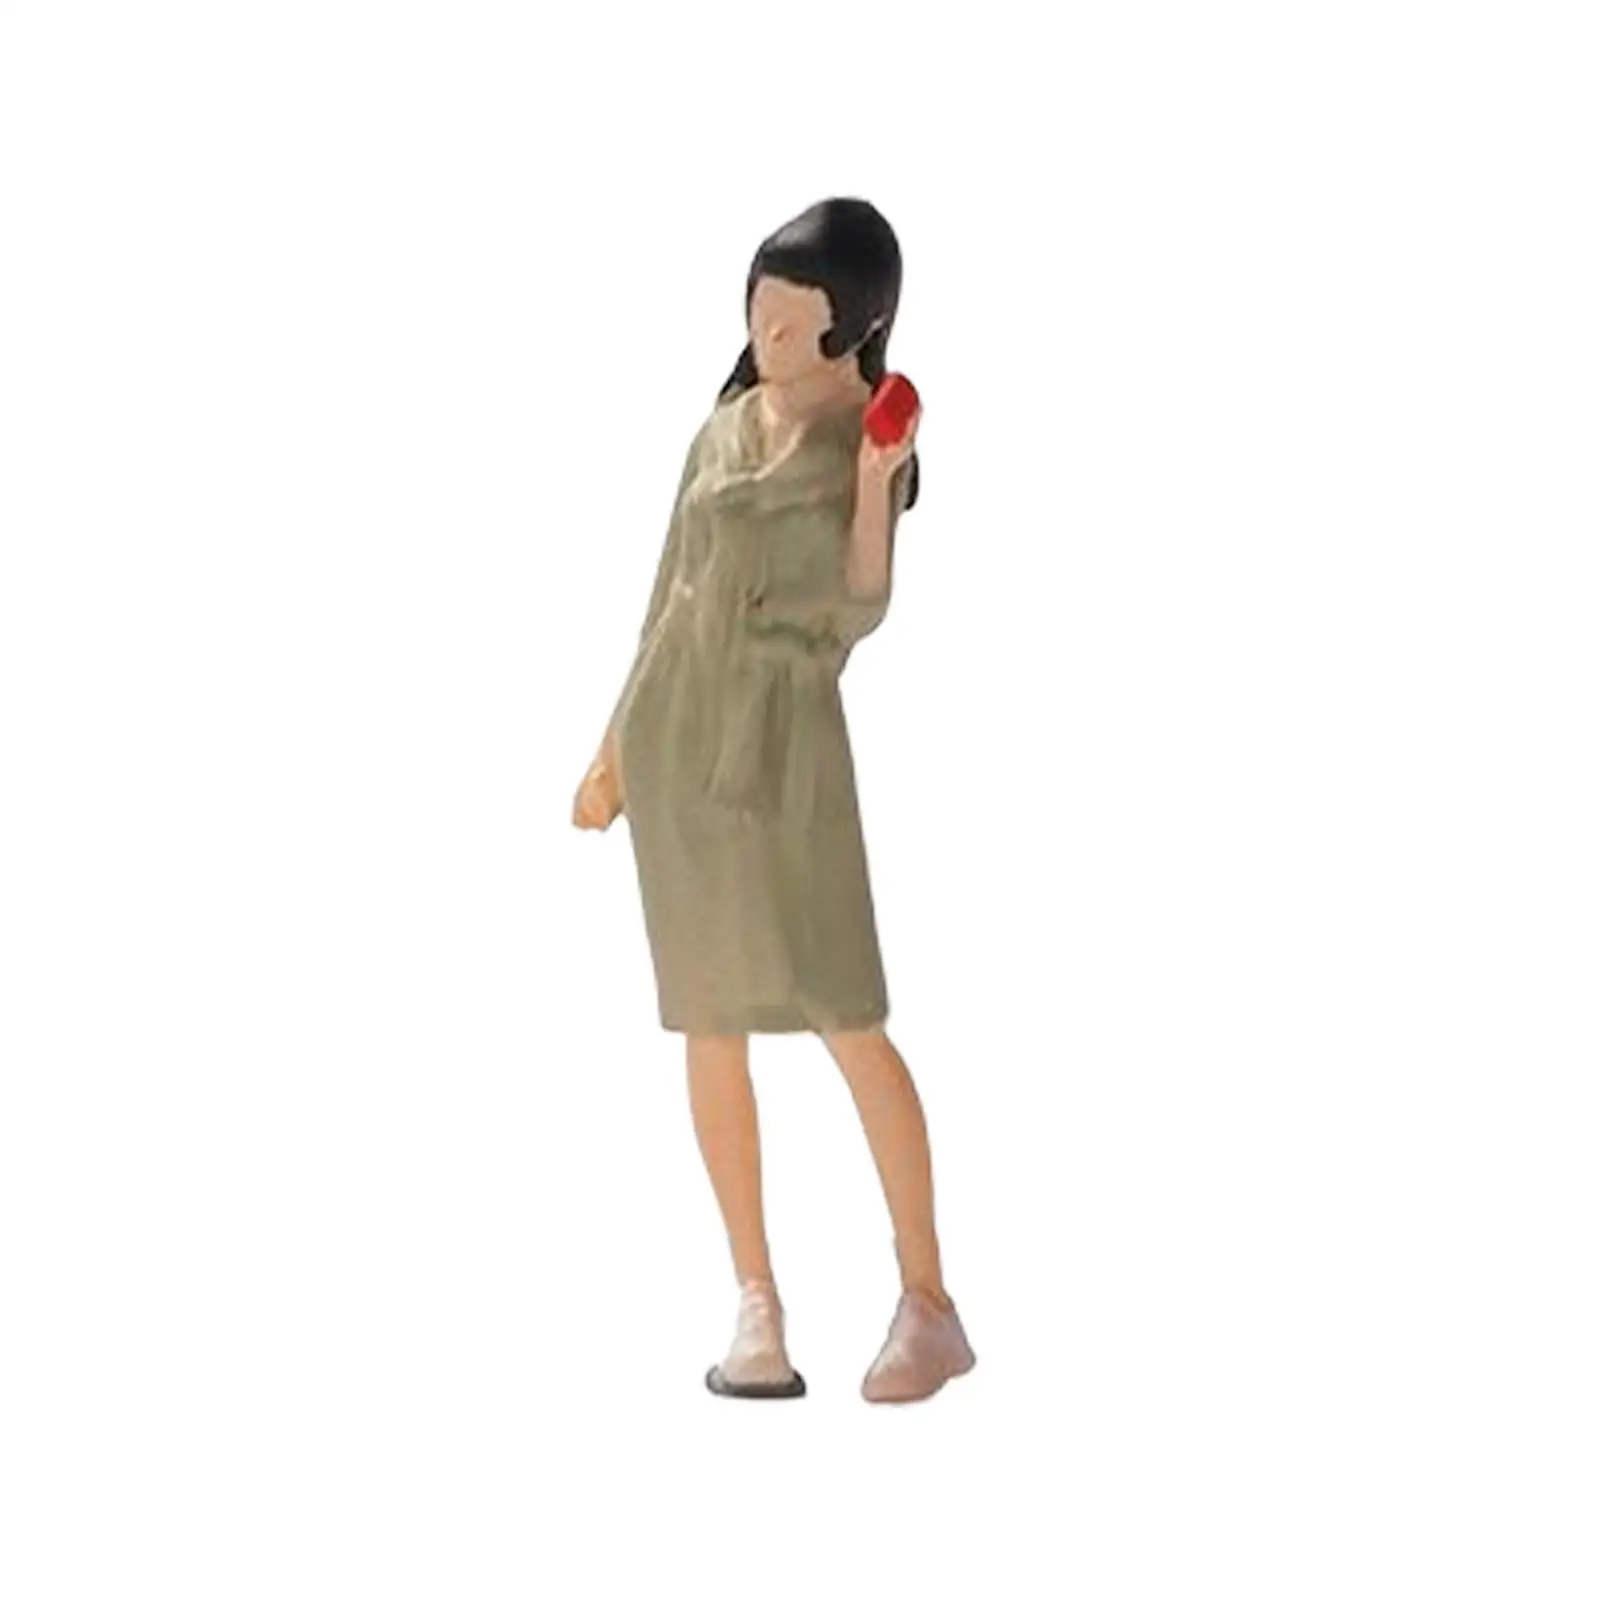 Girl People Figurine Diorama Scenery Architectural Character Model for Fairy Garden Miniature Scene Train Layout Micro Landscape